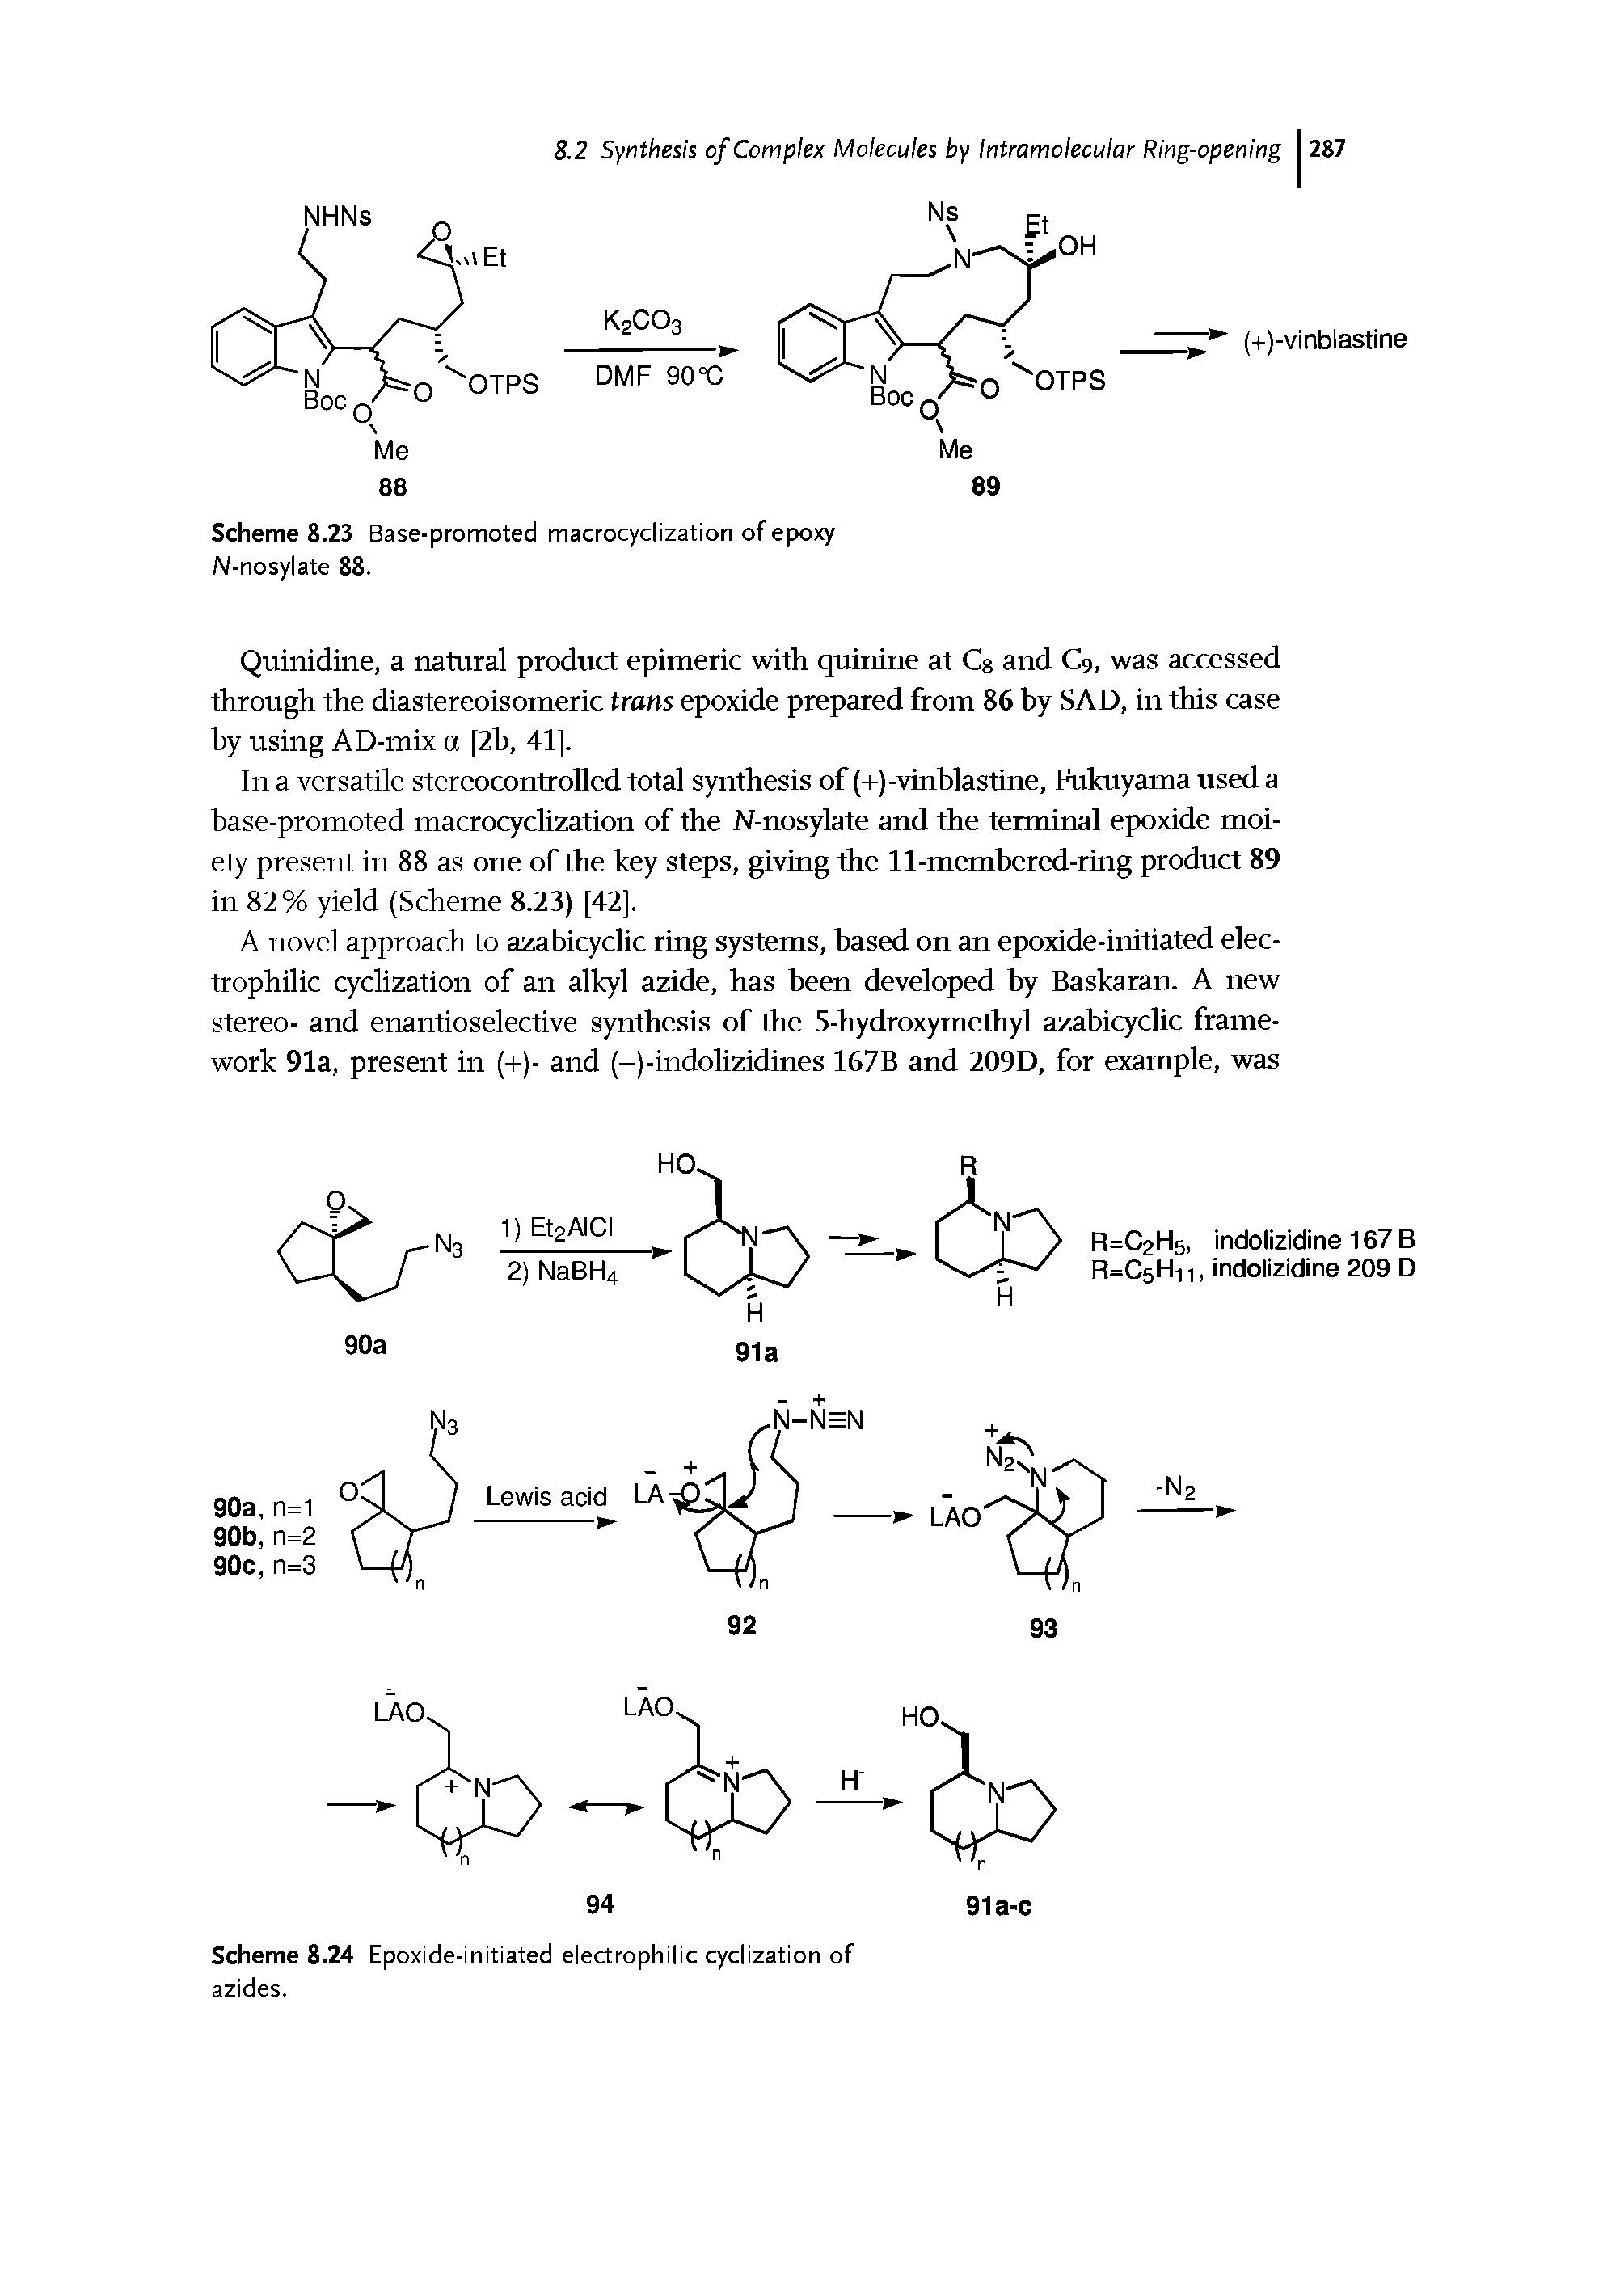 Scheme 8.24 Epoxide-initiated electrophilic cyclization of azides.